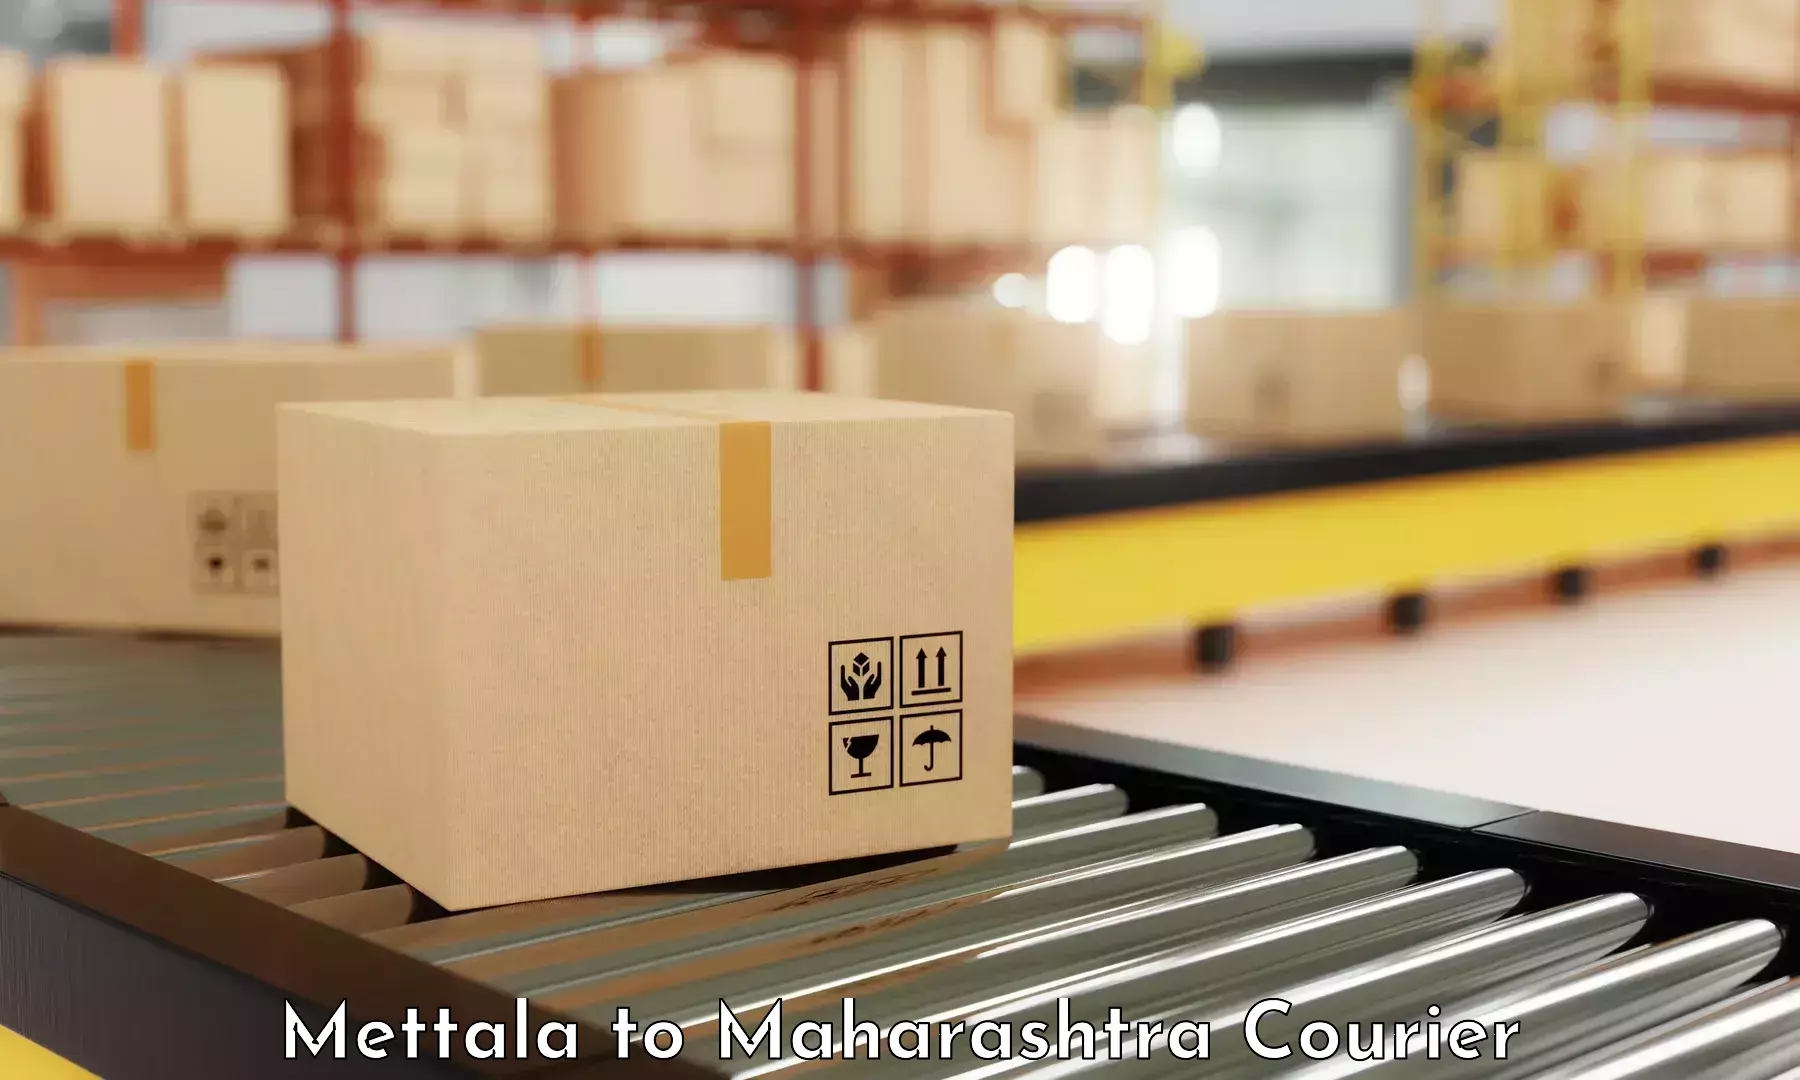 International parcel service Mettala to Mantha